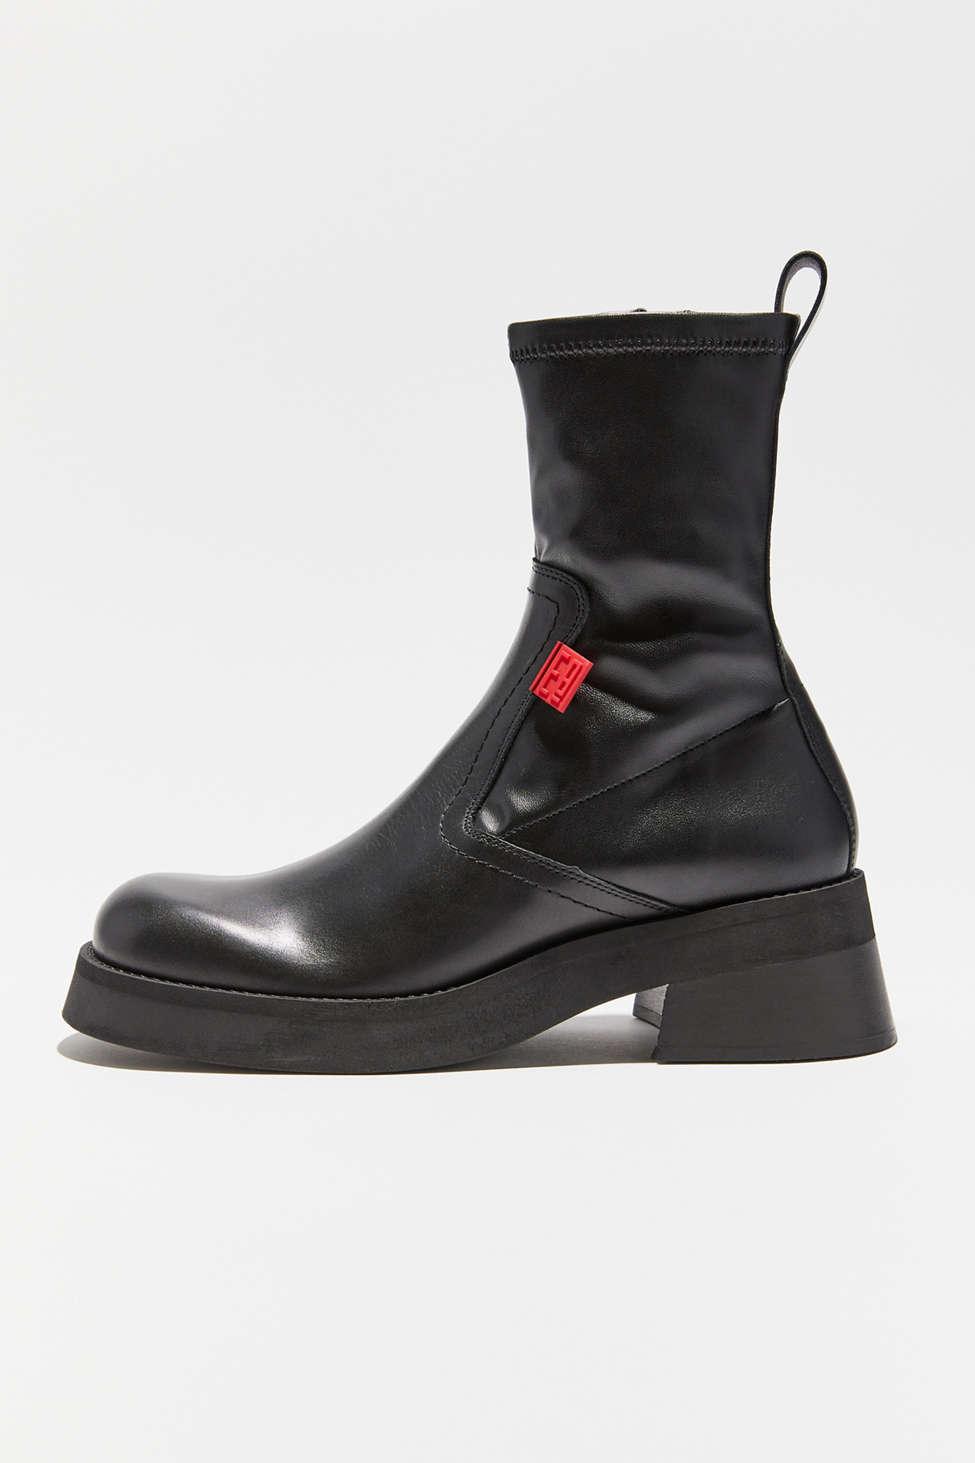 E8 By Miista Oliana Ankle Boot in Black | Lyst